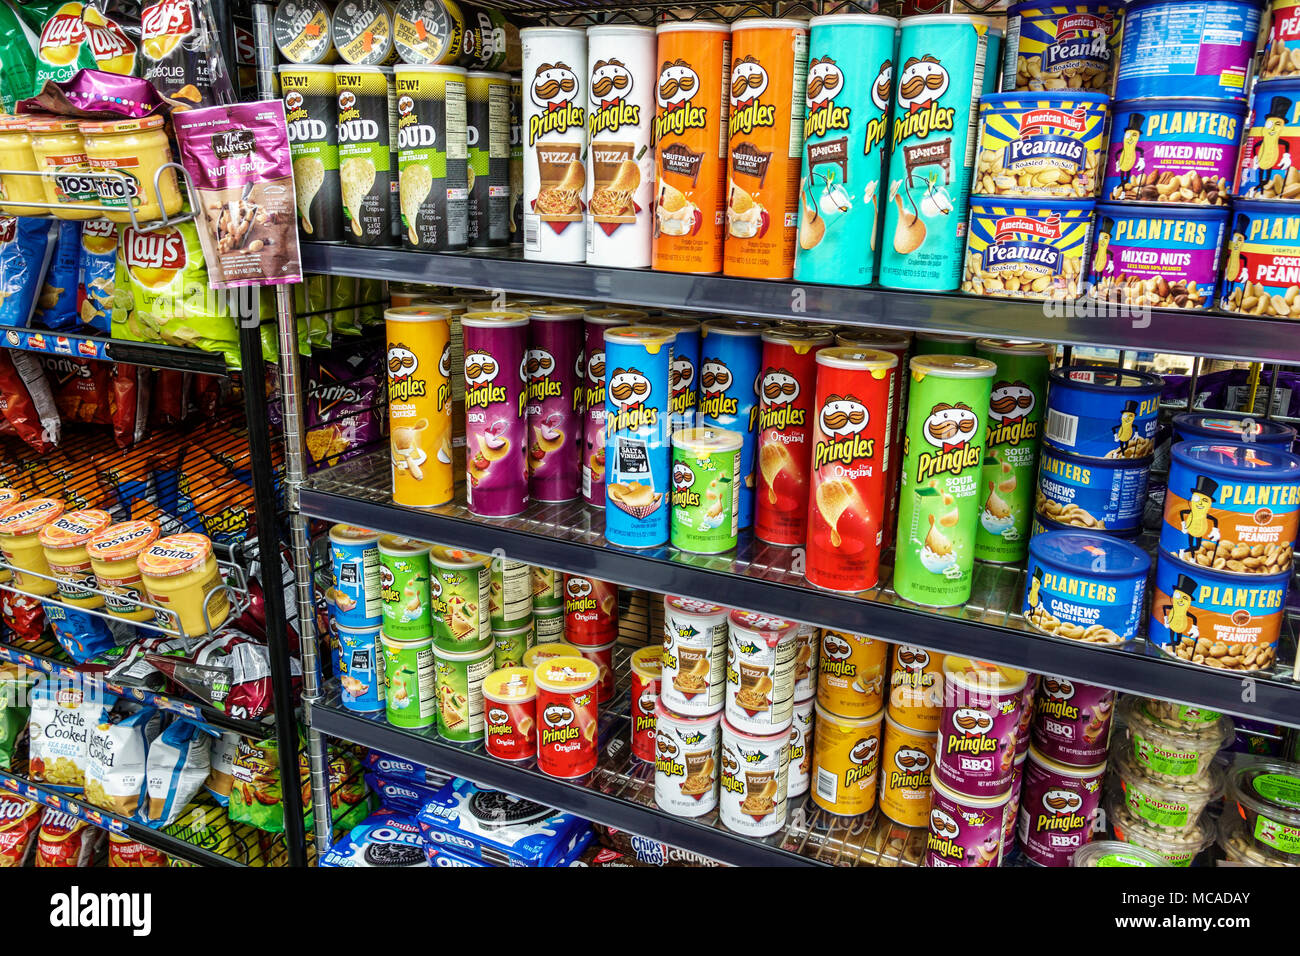 Miami Beach Florida,South Beach,La Playa,market,grocery store,display,Pringles,potato chips,Planters,peanuts,snacks,wire shelf,FL180302003 Stock Photo